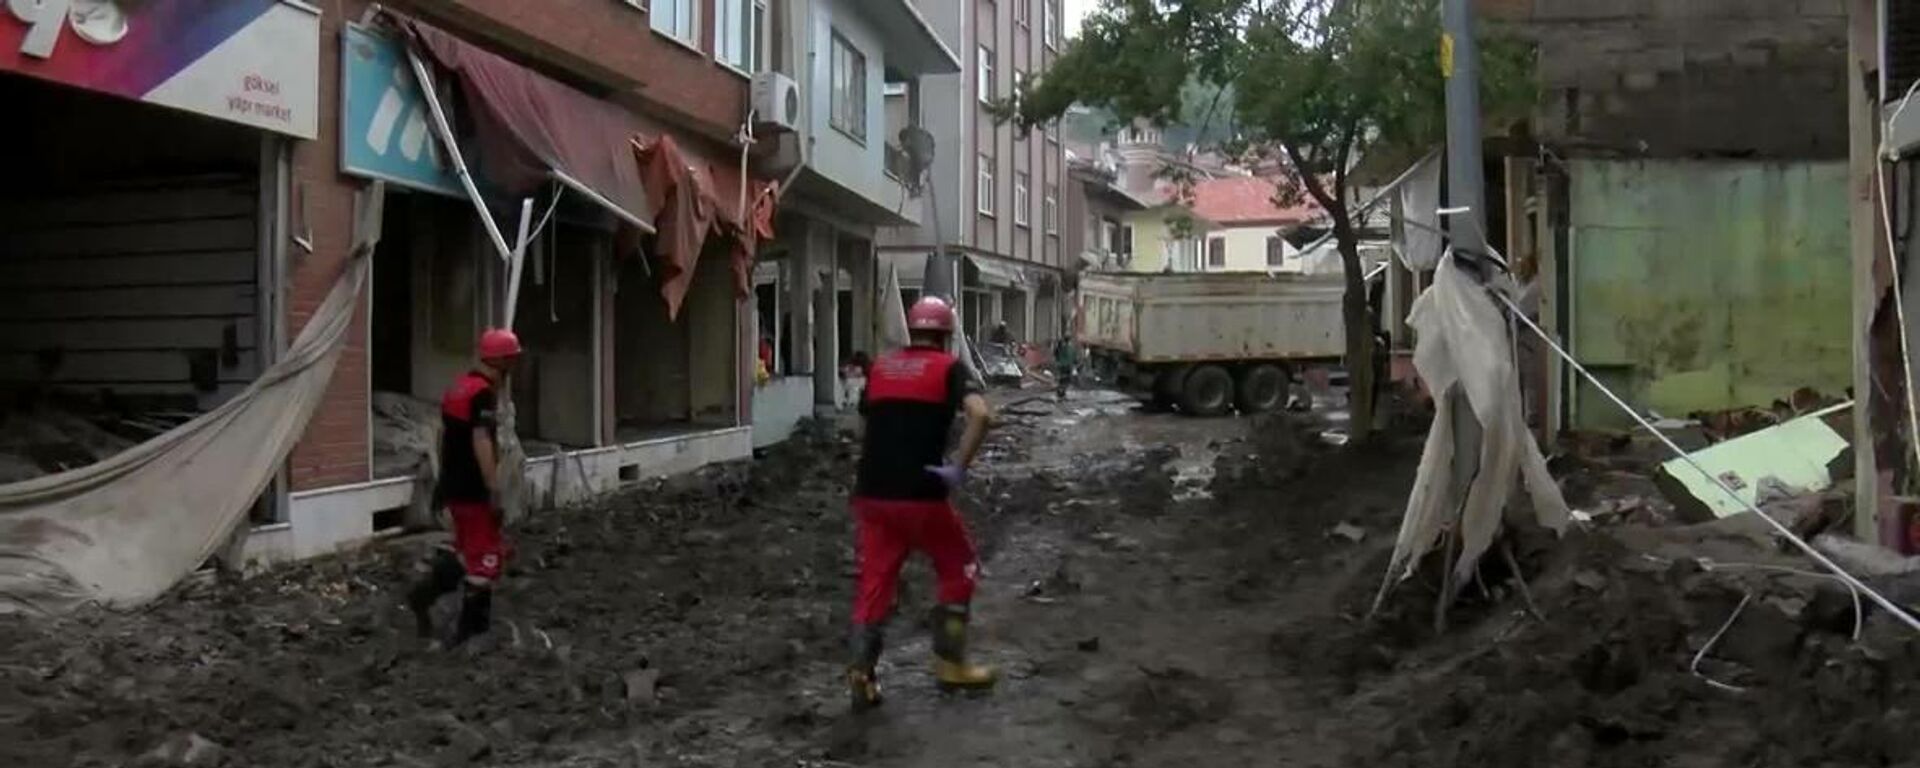 Turkey: Clean-up efforts begin following devastating floods in Bozkurt - Sputnik Молдова, 1920, 15.08.2021